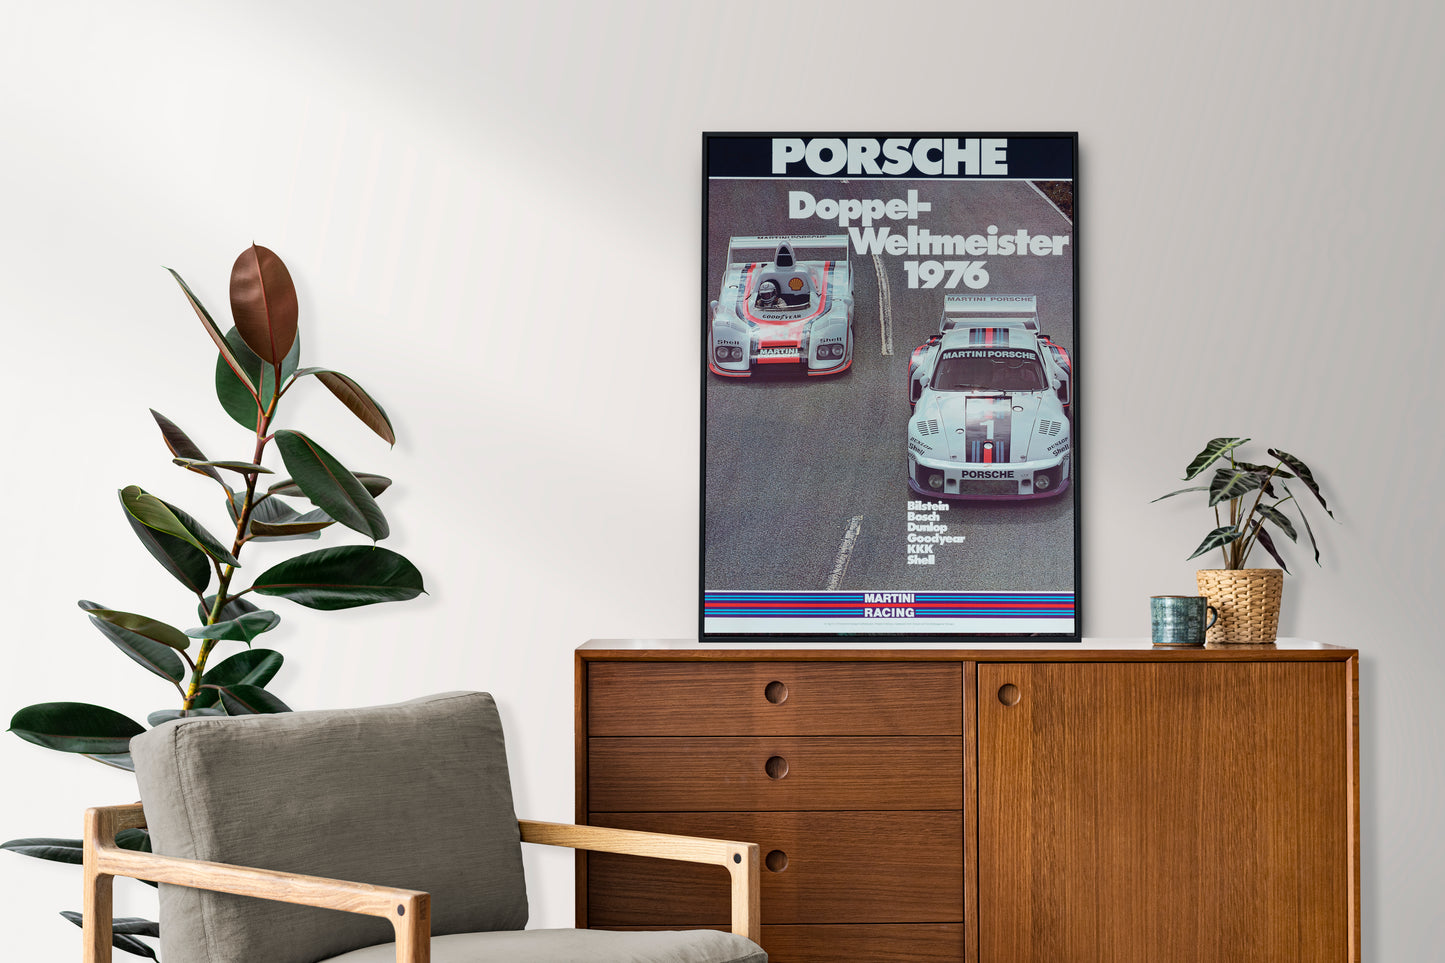 Porsche Martini Racing Double World Champions Poster